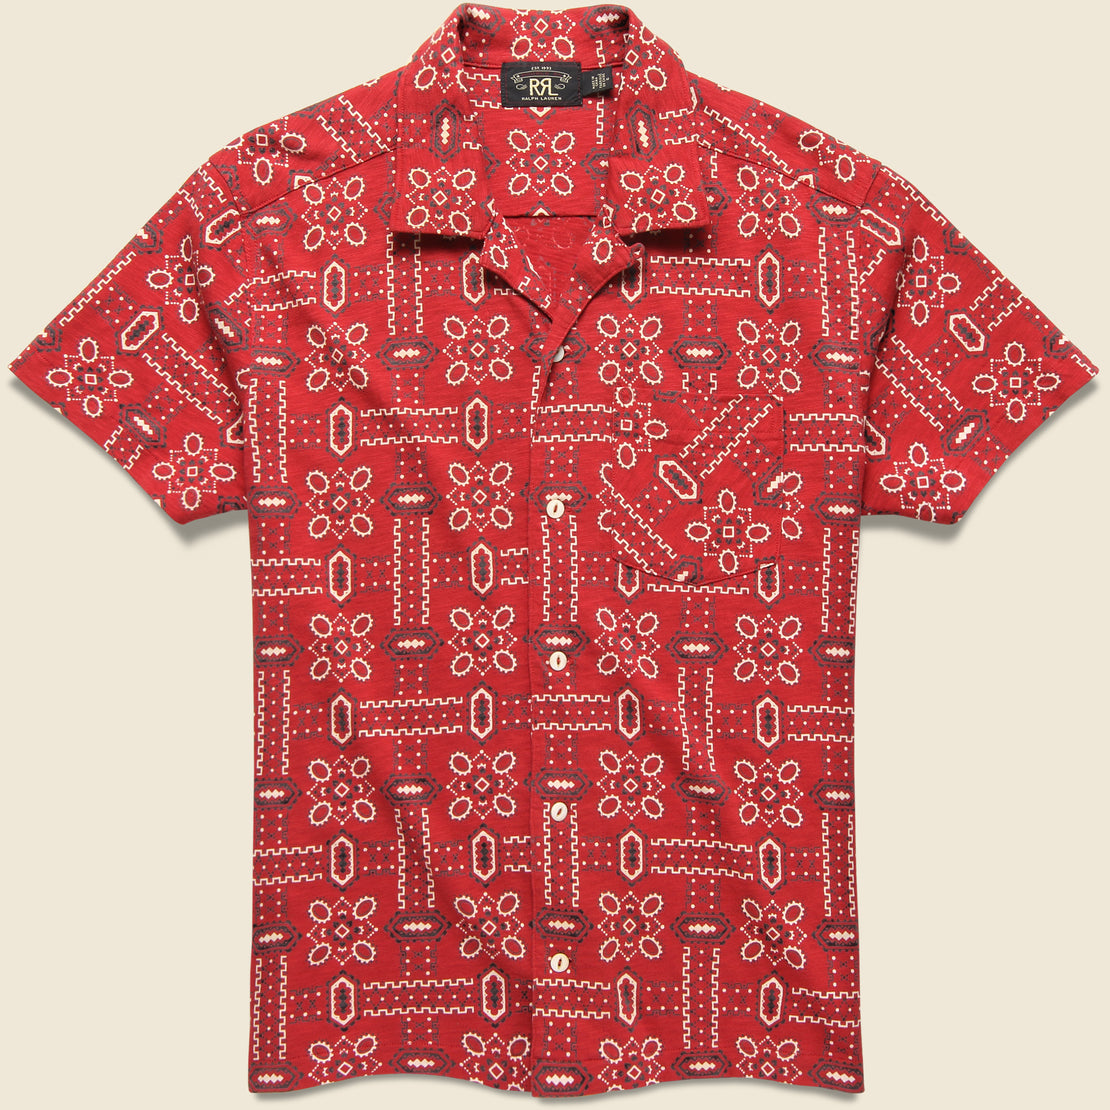 RRL Bandana Print Knit Camp Shirt - Red/Multi